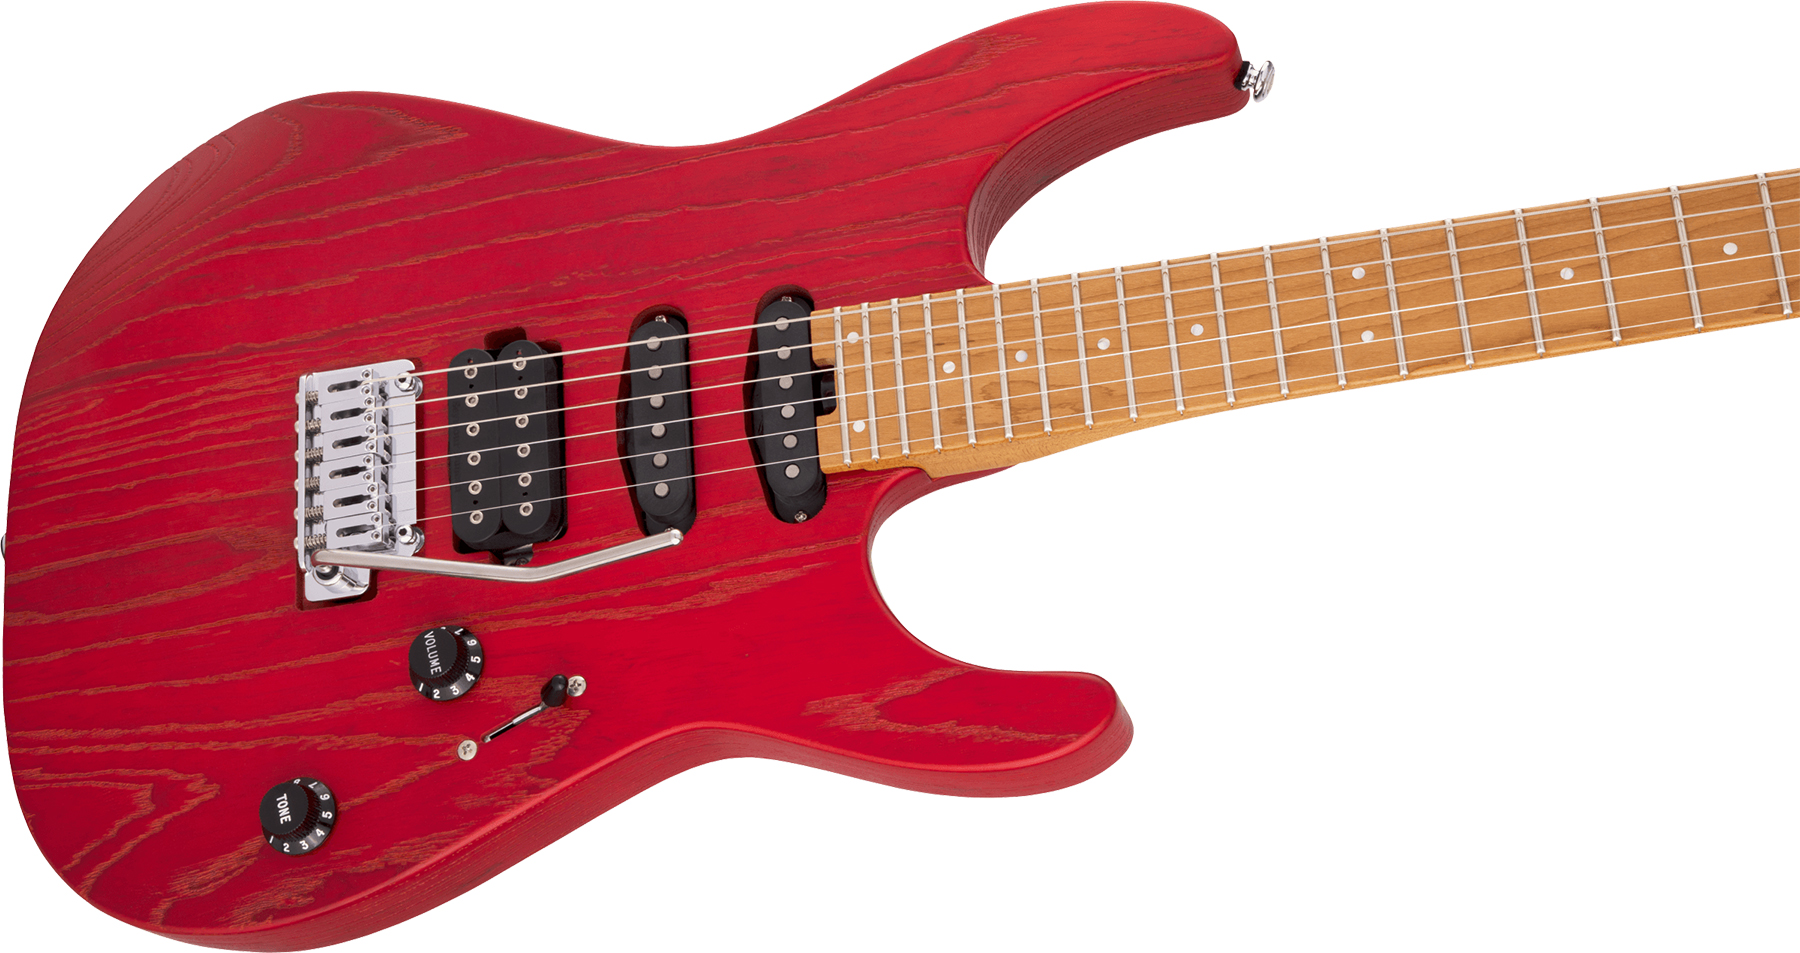 Charvel Dinky Dk24 Hss 2pt Cm Ash Pro-mod Seymour Duncan Trem Mn - Red Ash - Guitare Électrique Forme Str - Variation 2